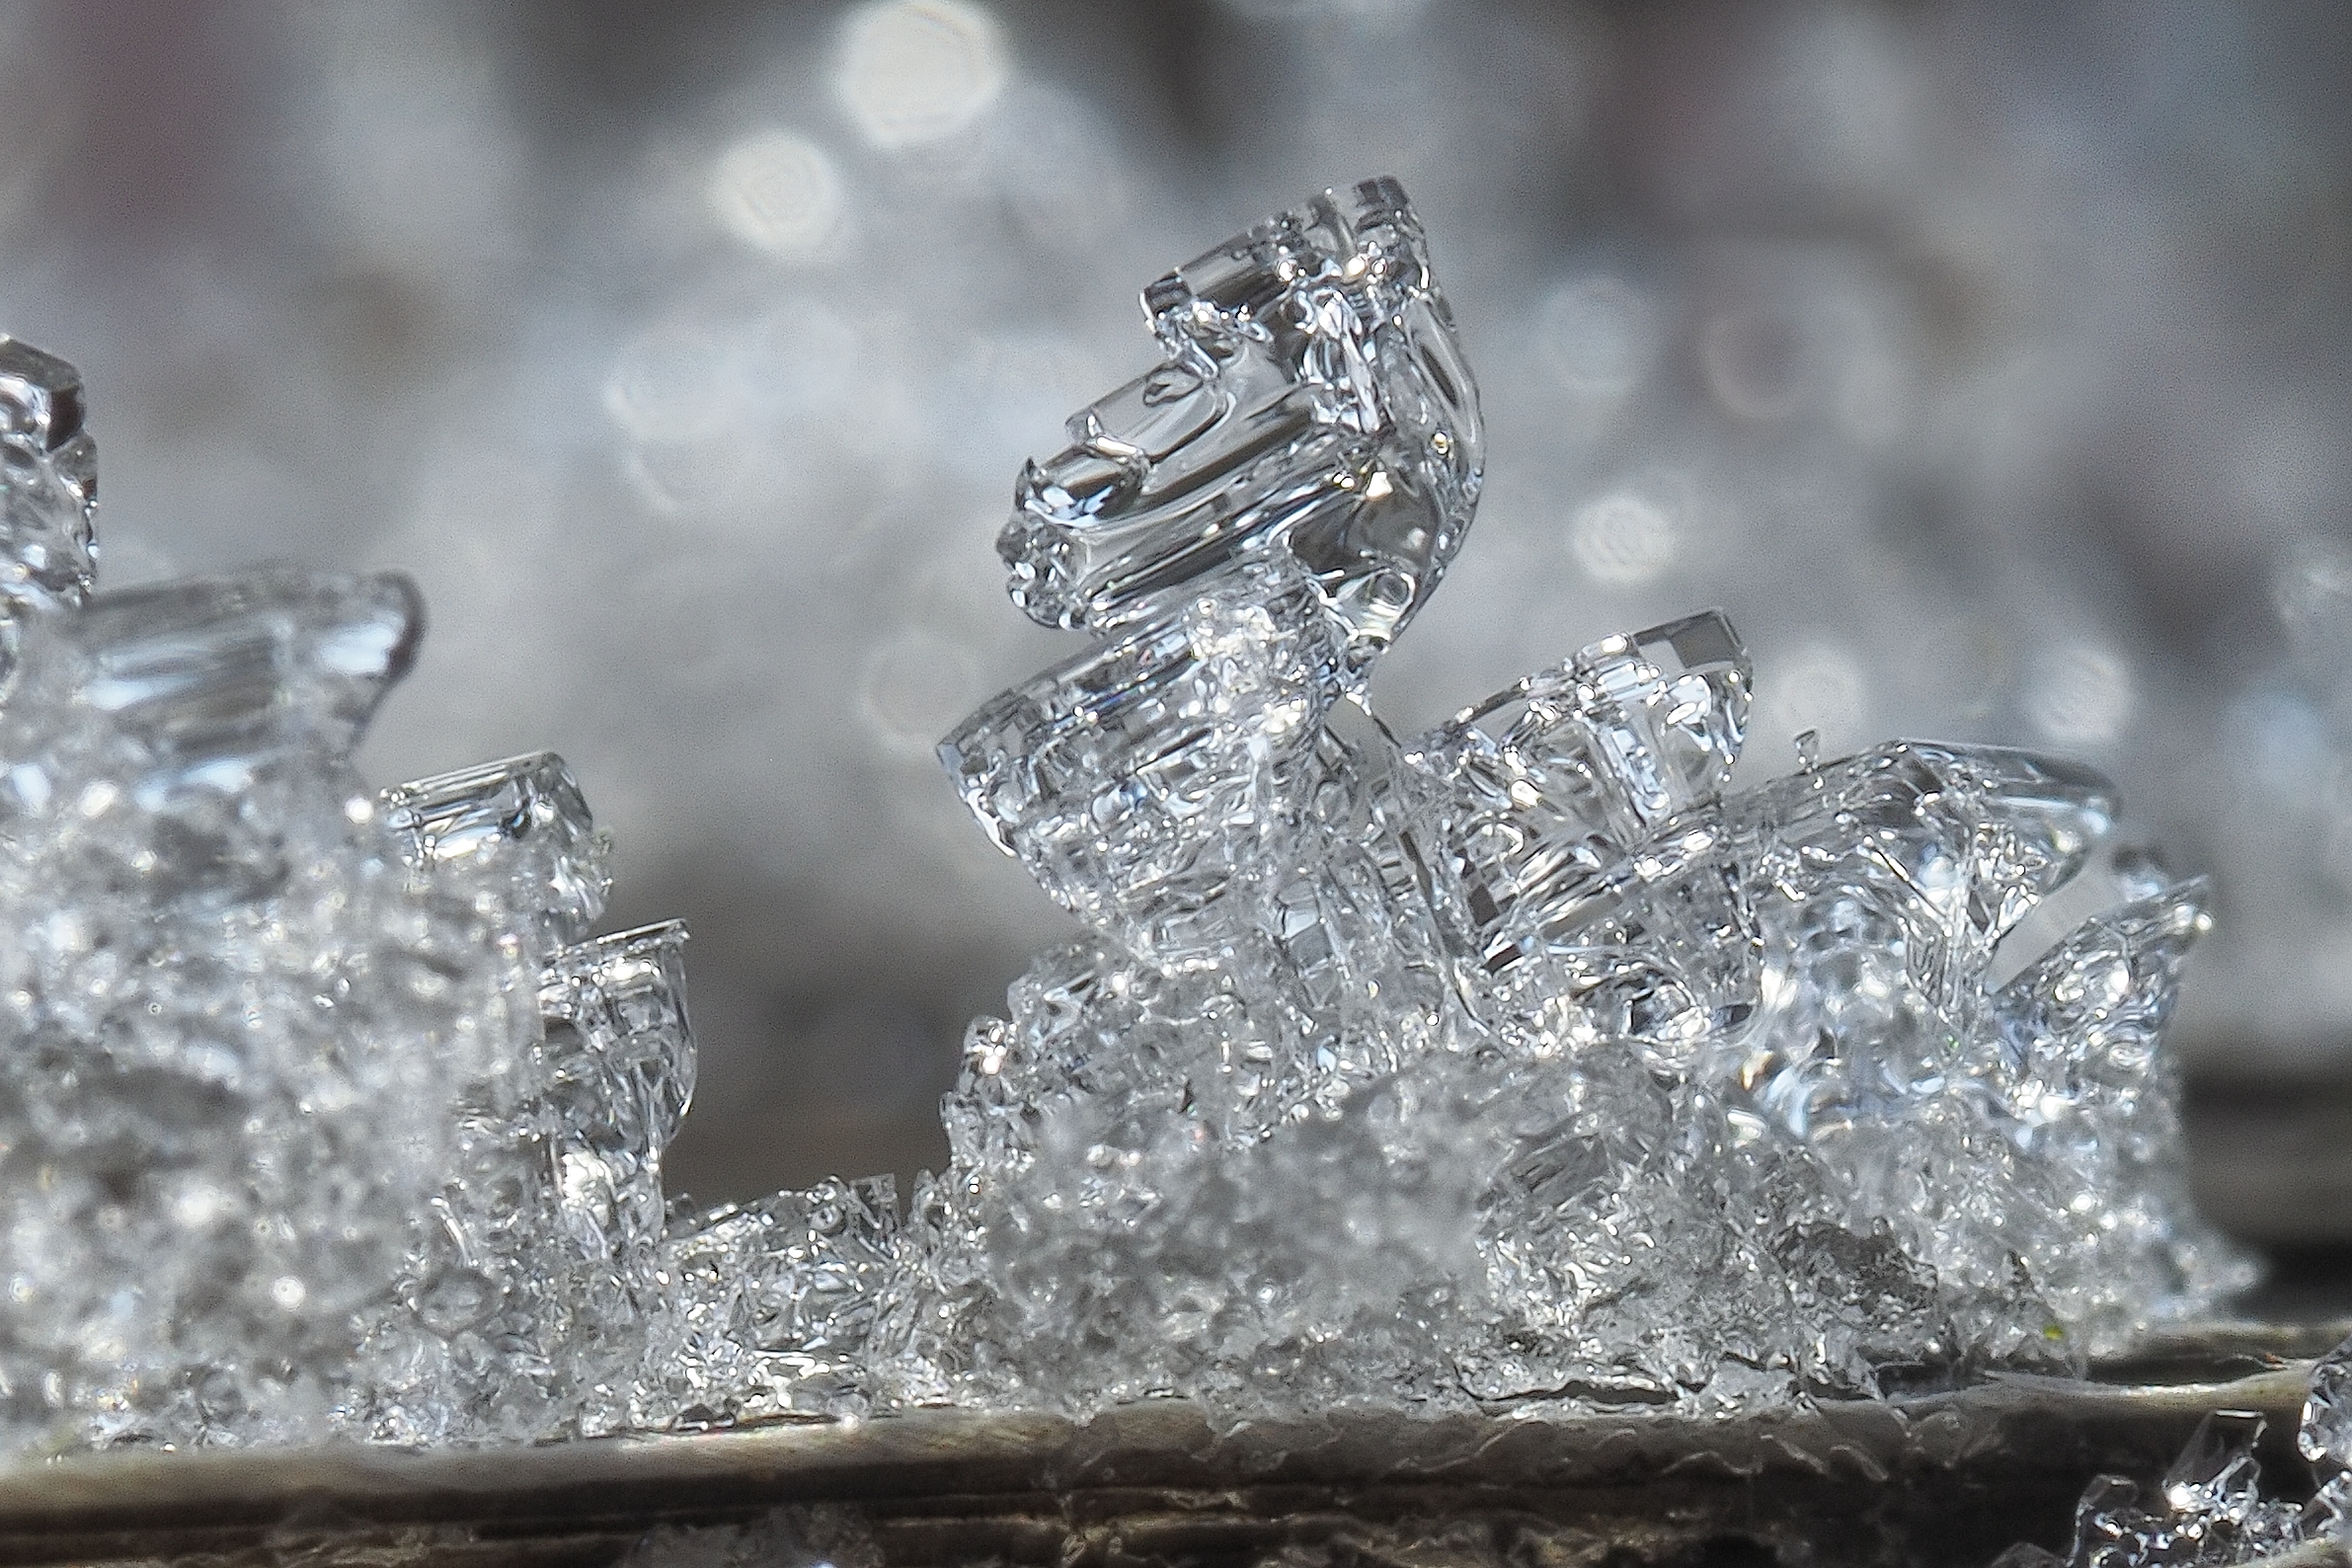 little ice cristals...